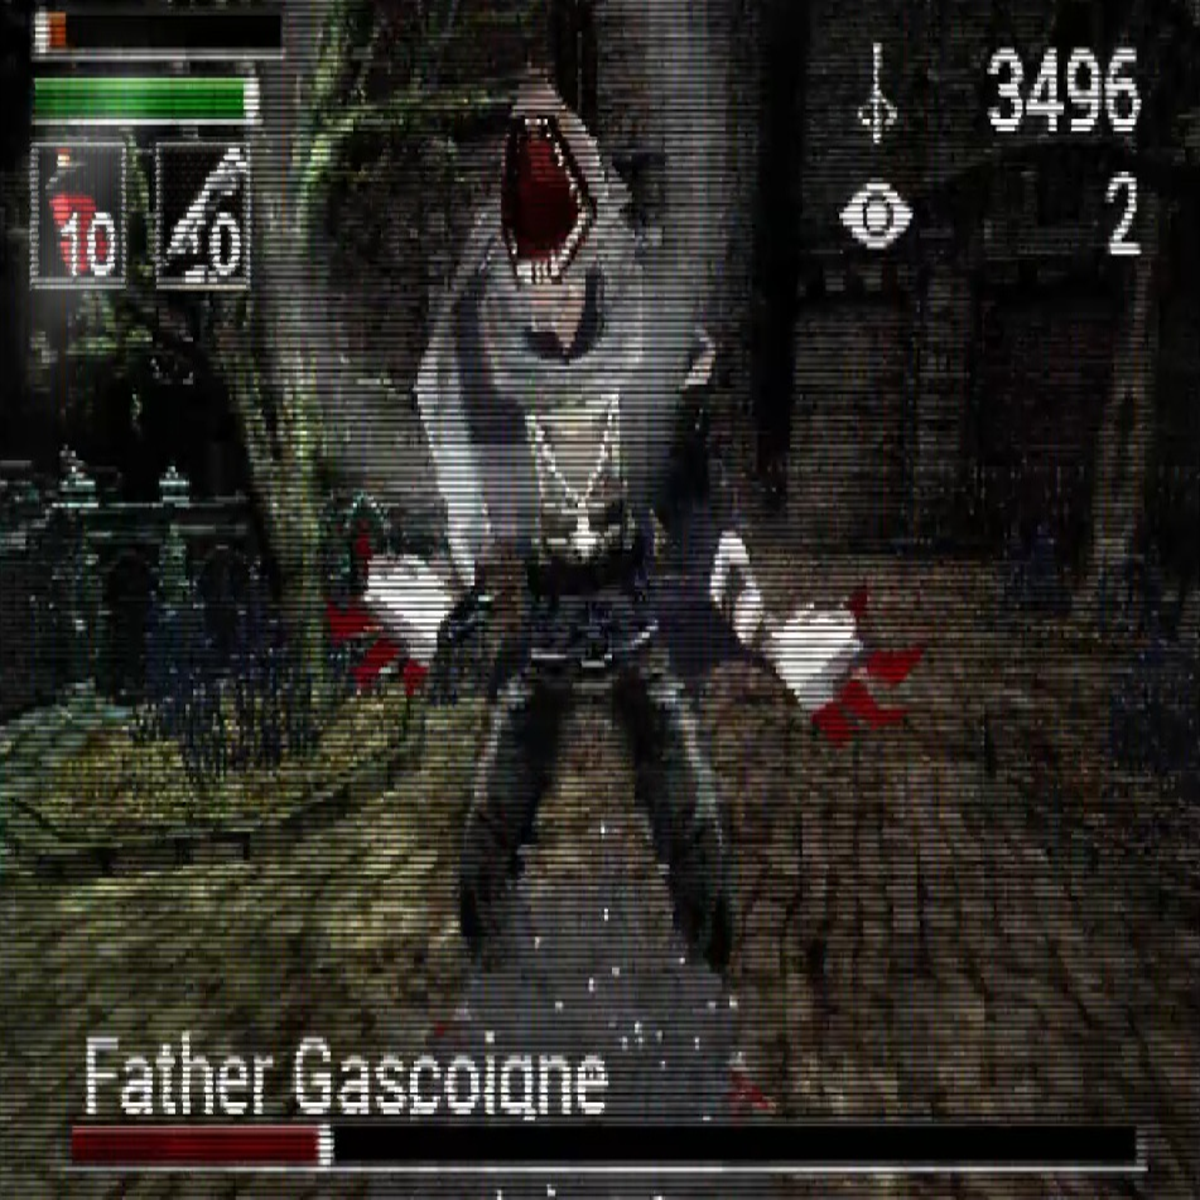 De fã para fã: Bloodborne PSX já está disponível para PC